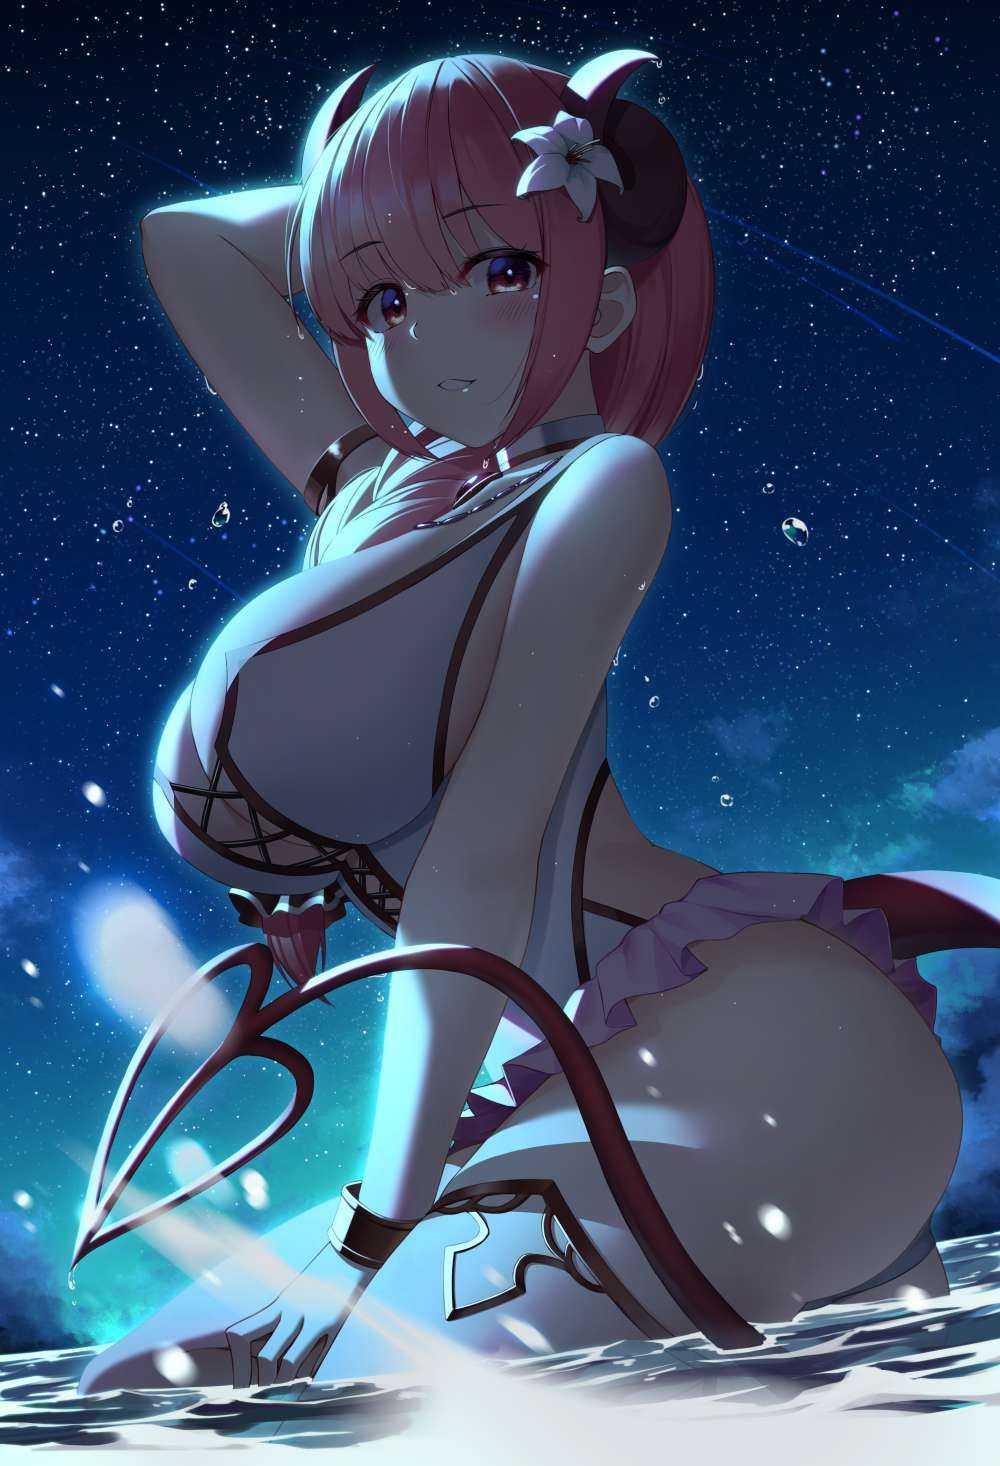 [Precone R] Io's erotic image [Princess Connect! ] Re:Dive】 37